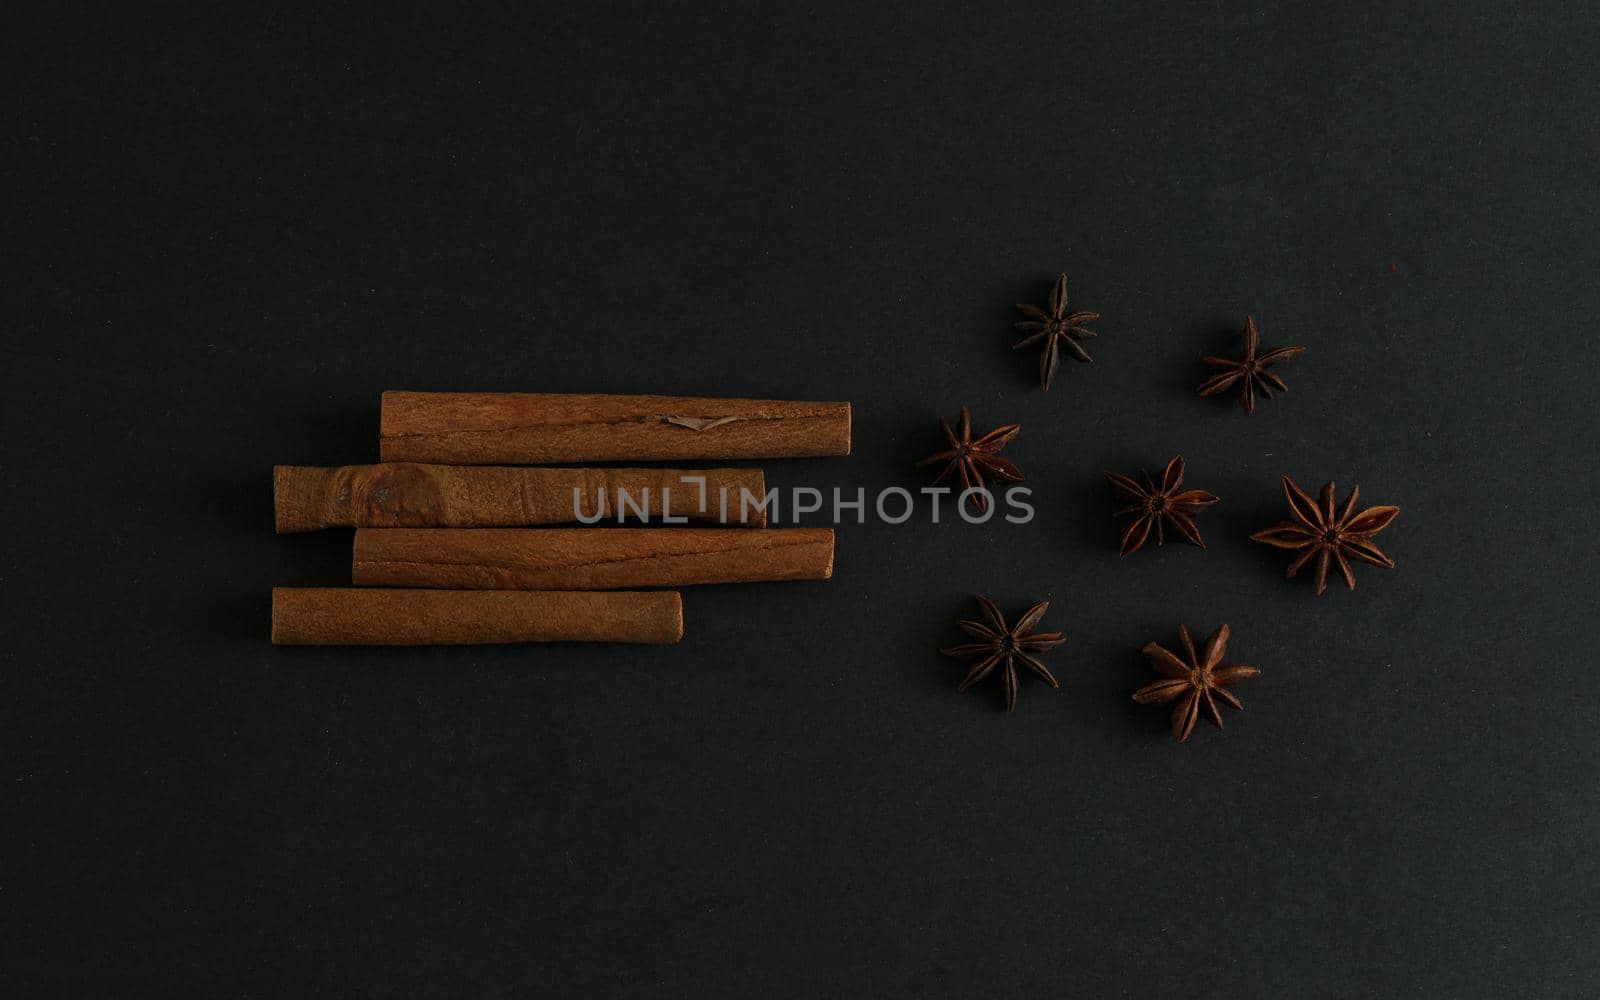 Cinnamon sticks and anise stars flatlay on black background by Senorina_Irina